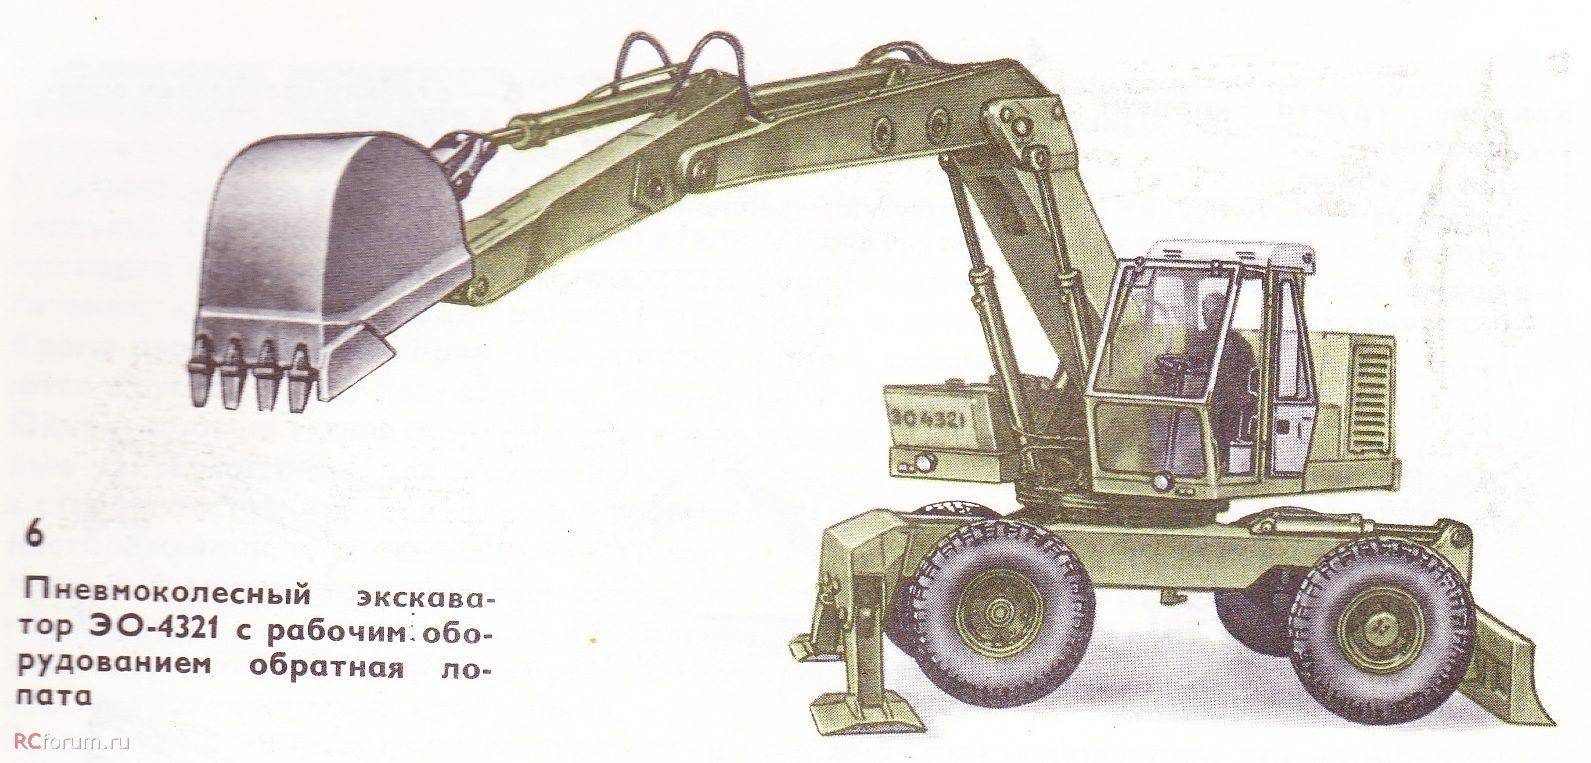 Эо 4321 технические характеристики. экскаватор эо 4321 — легенда советского производства